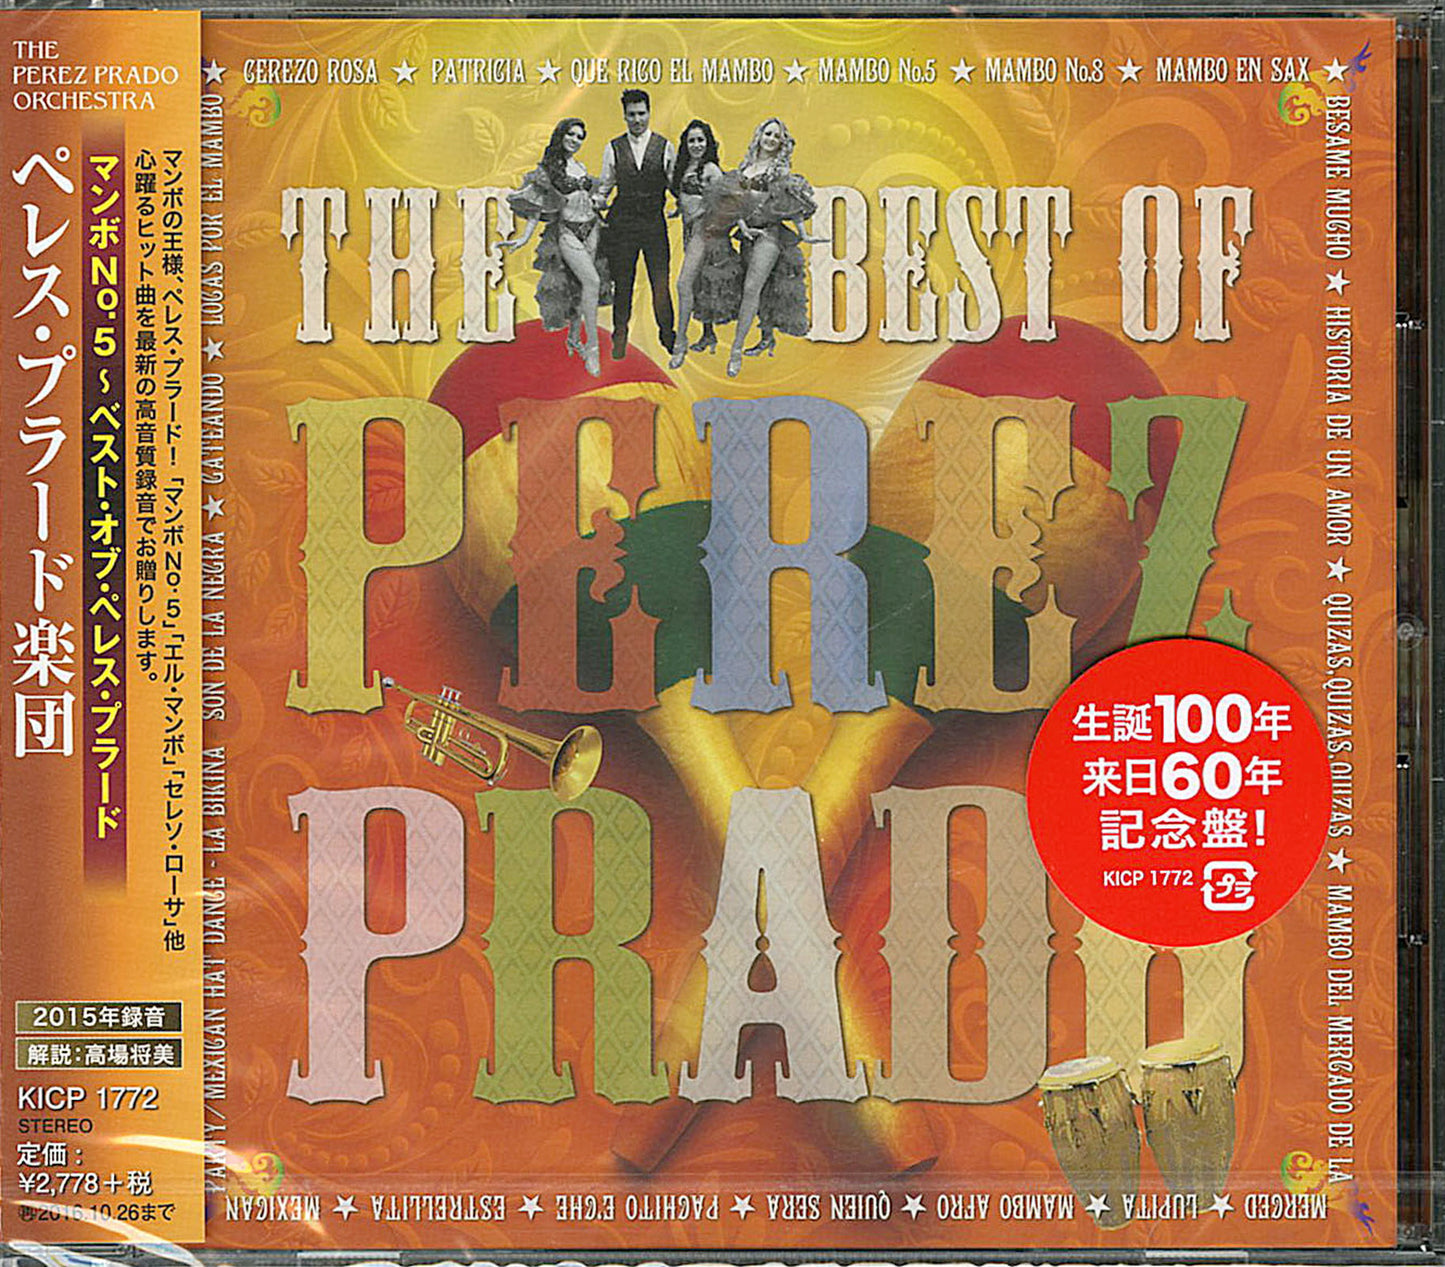 Perez Prado Orchestra - The Best Of Perez Prado - Japan CD